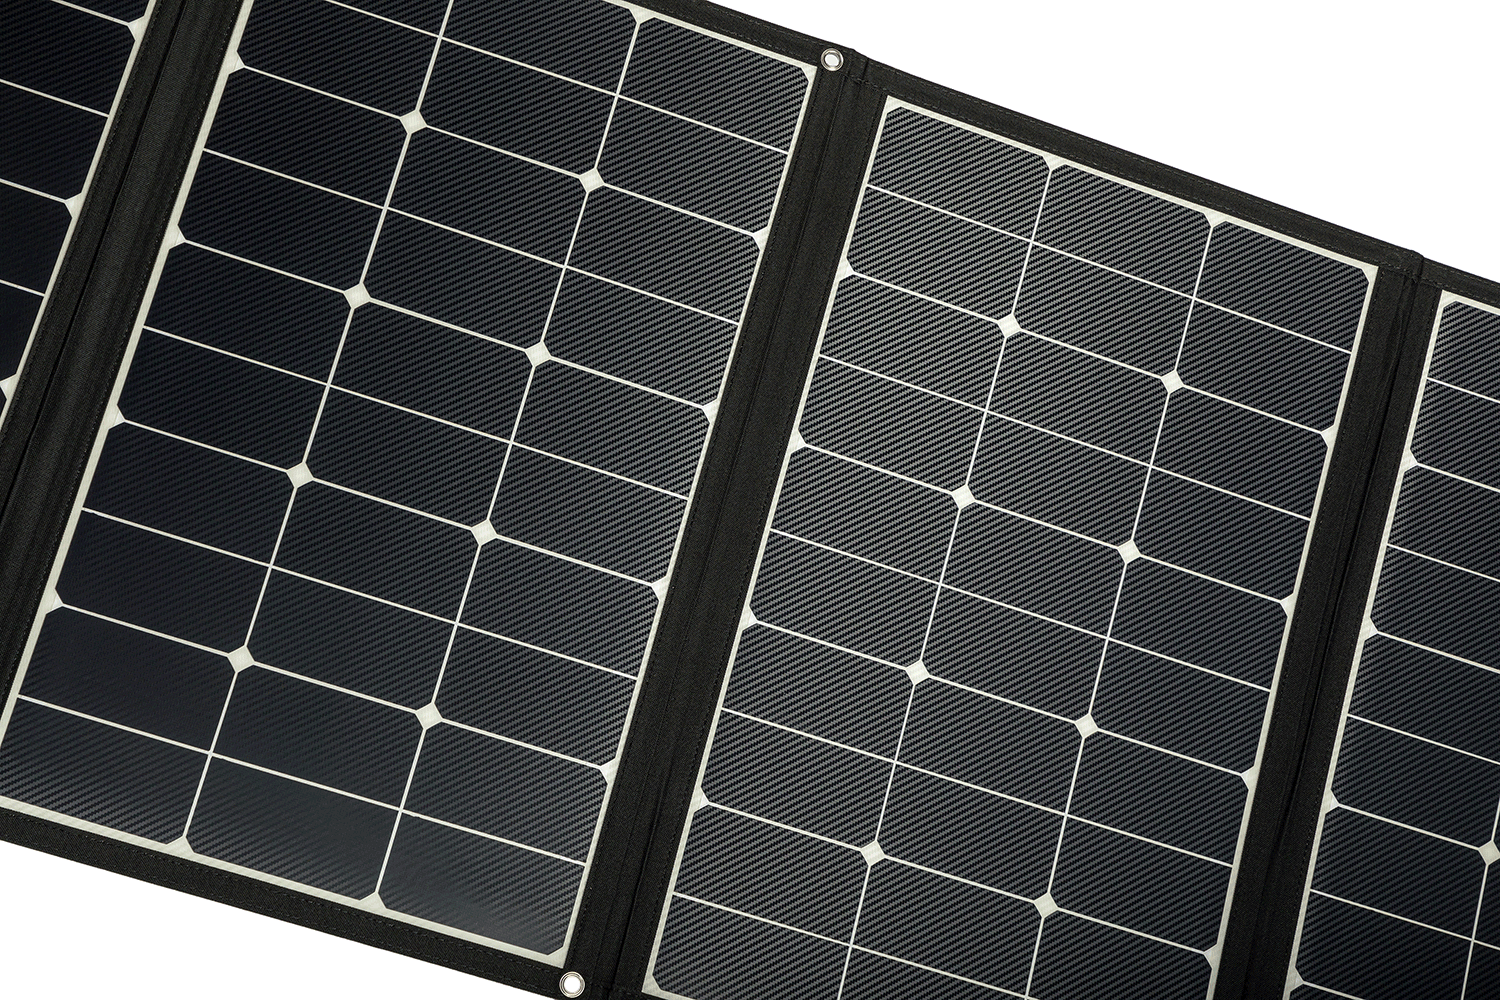 Panneaux solaires WS200SF-HV  Whattstunde - 200W